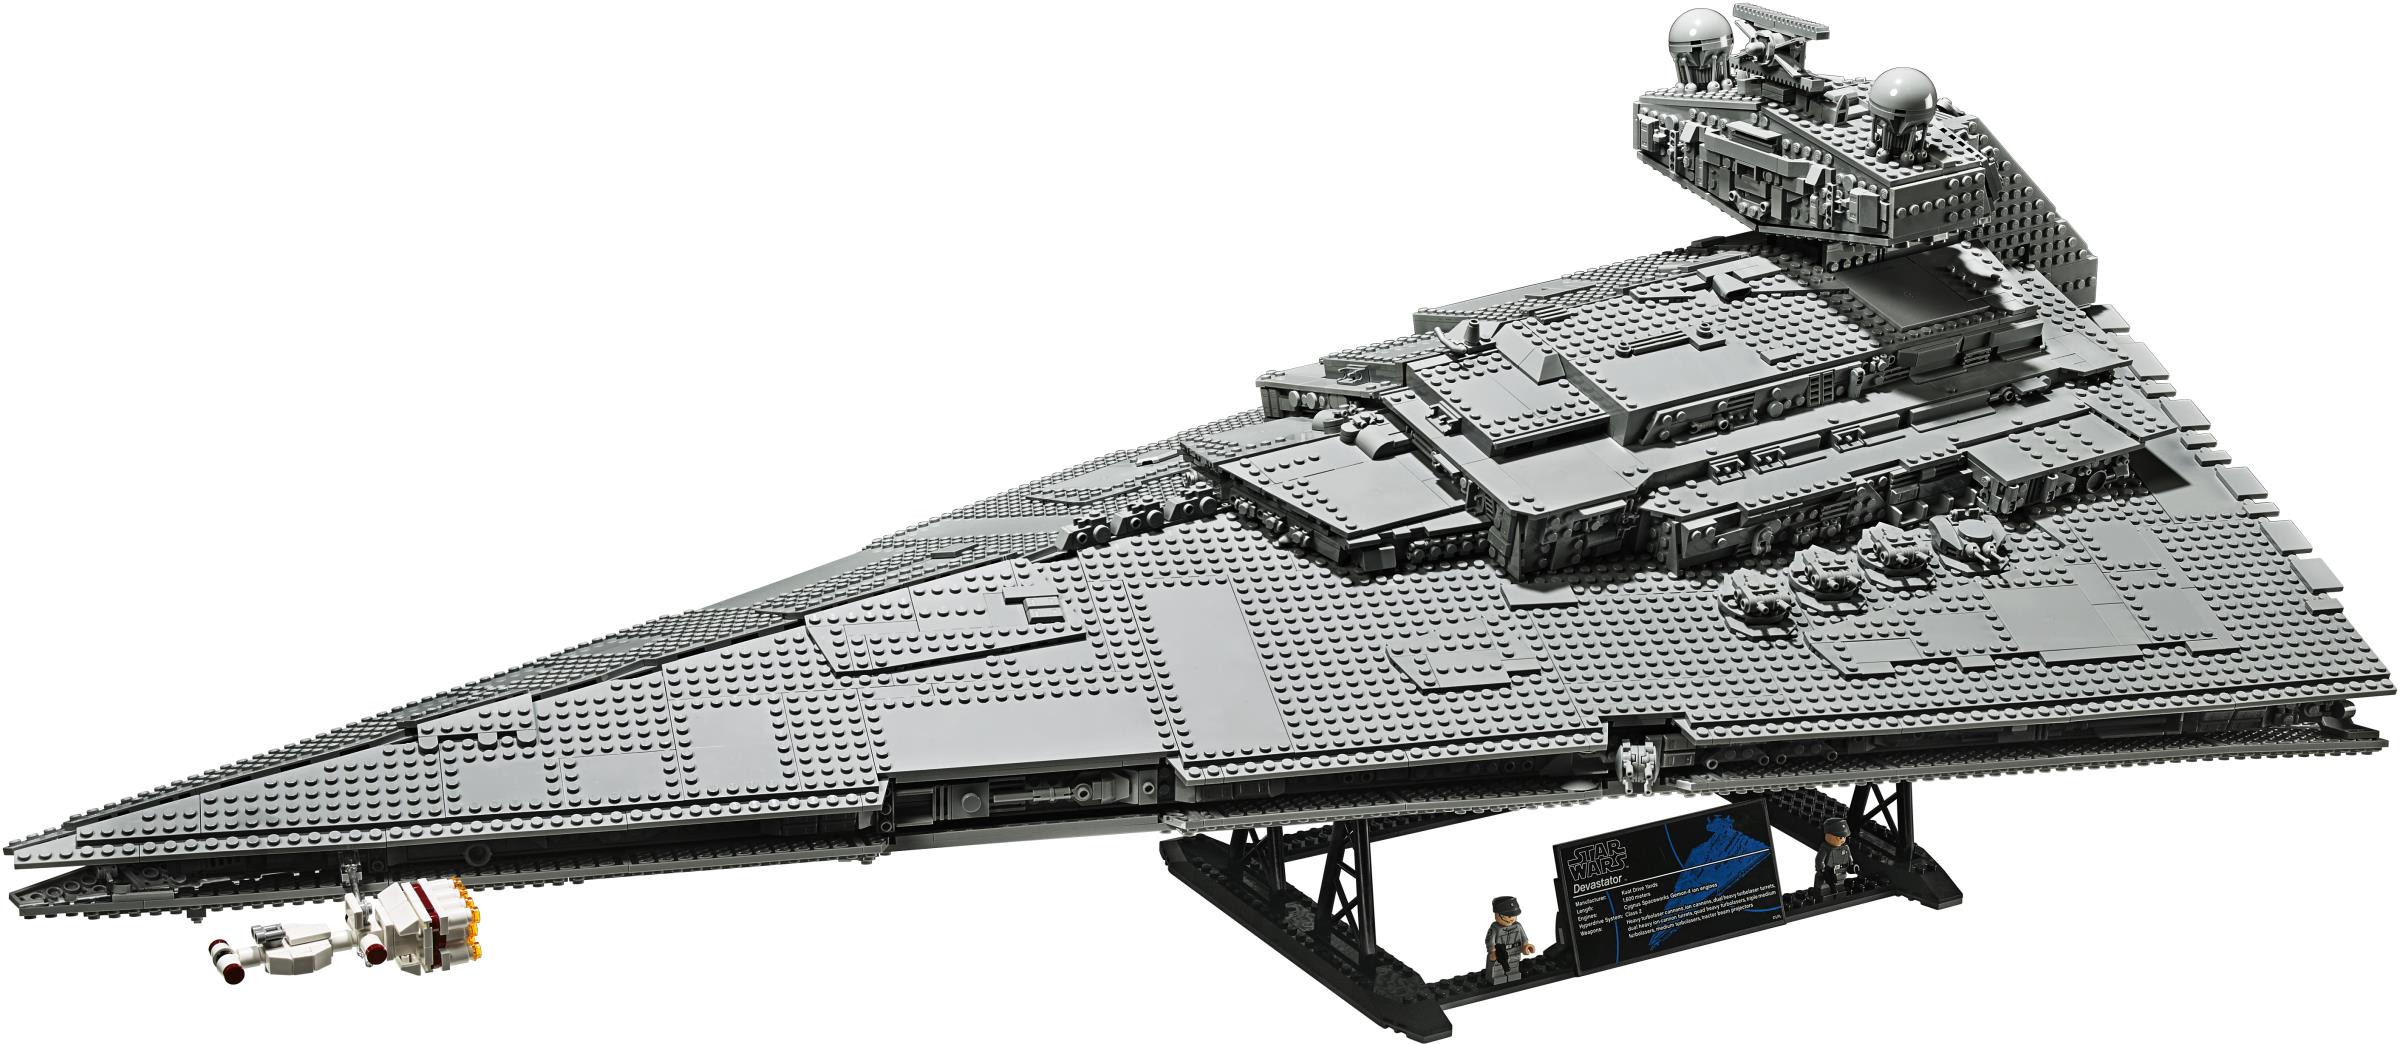 støvle kommentar Smuk LEGO 75252 Star Wars Imperial Star Destroyer | BrickEconomy